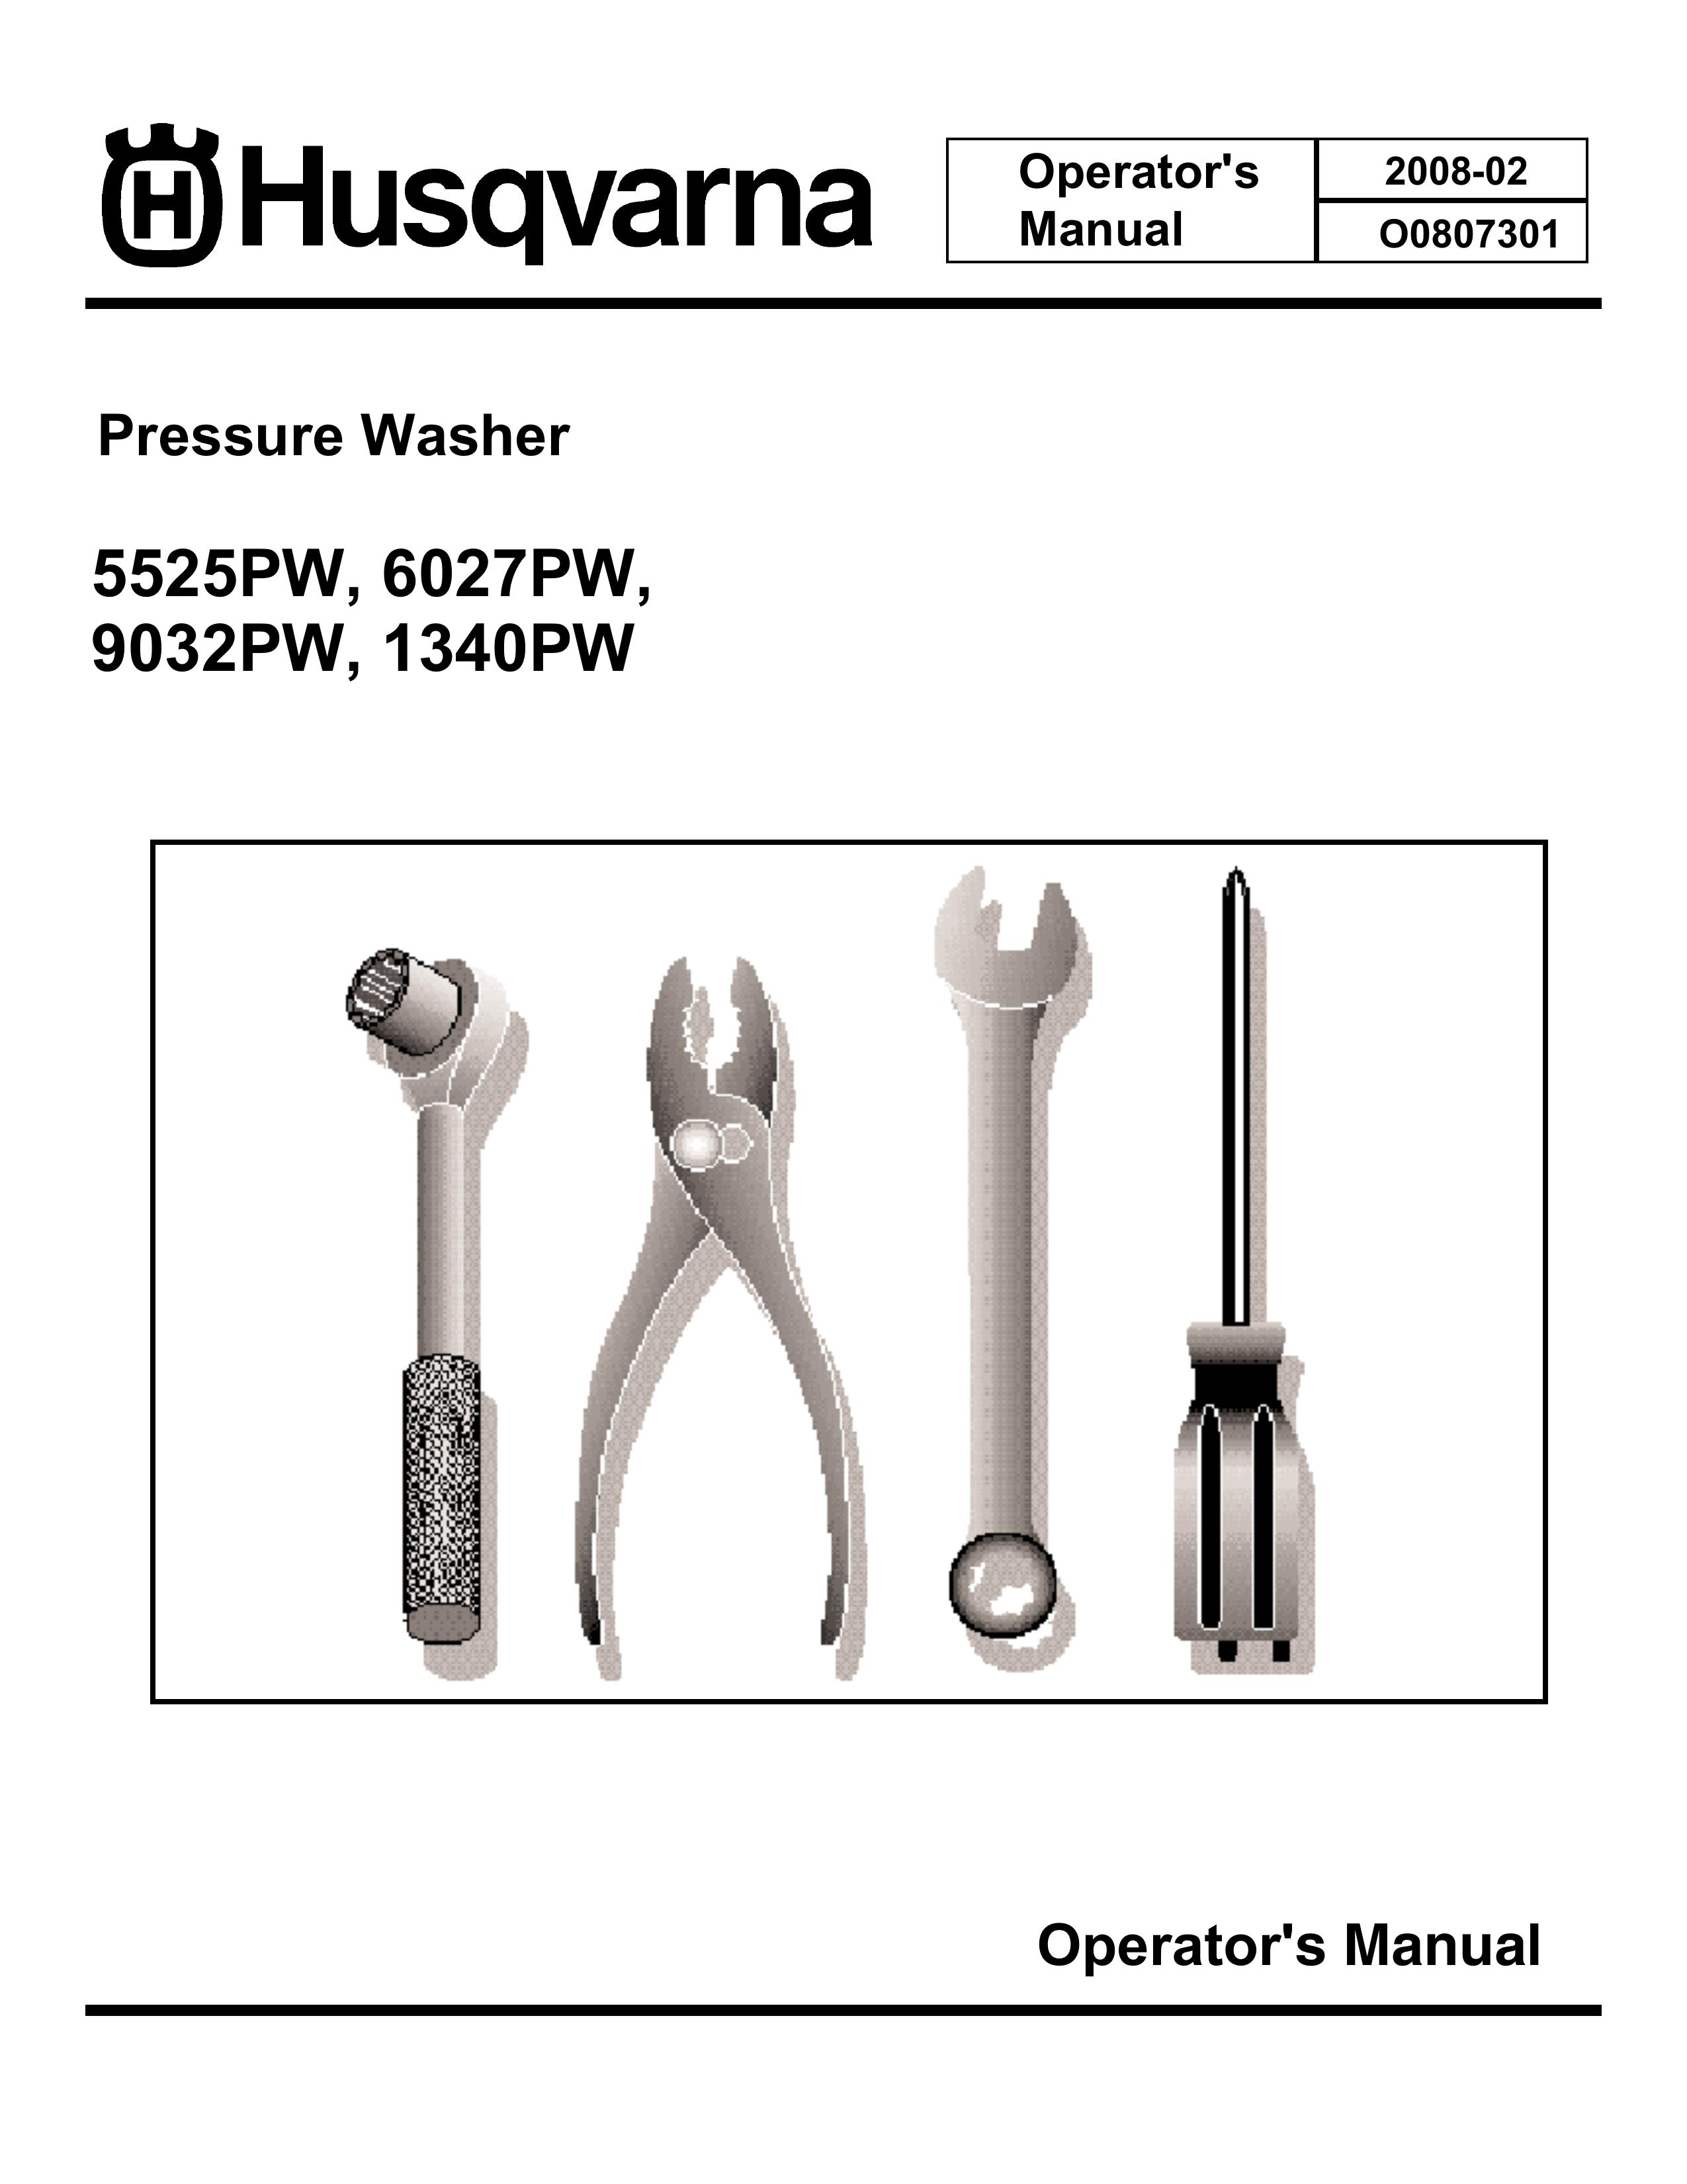 Husqvarna 1340PW Pressure Washer User Manual